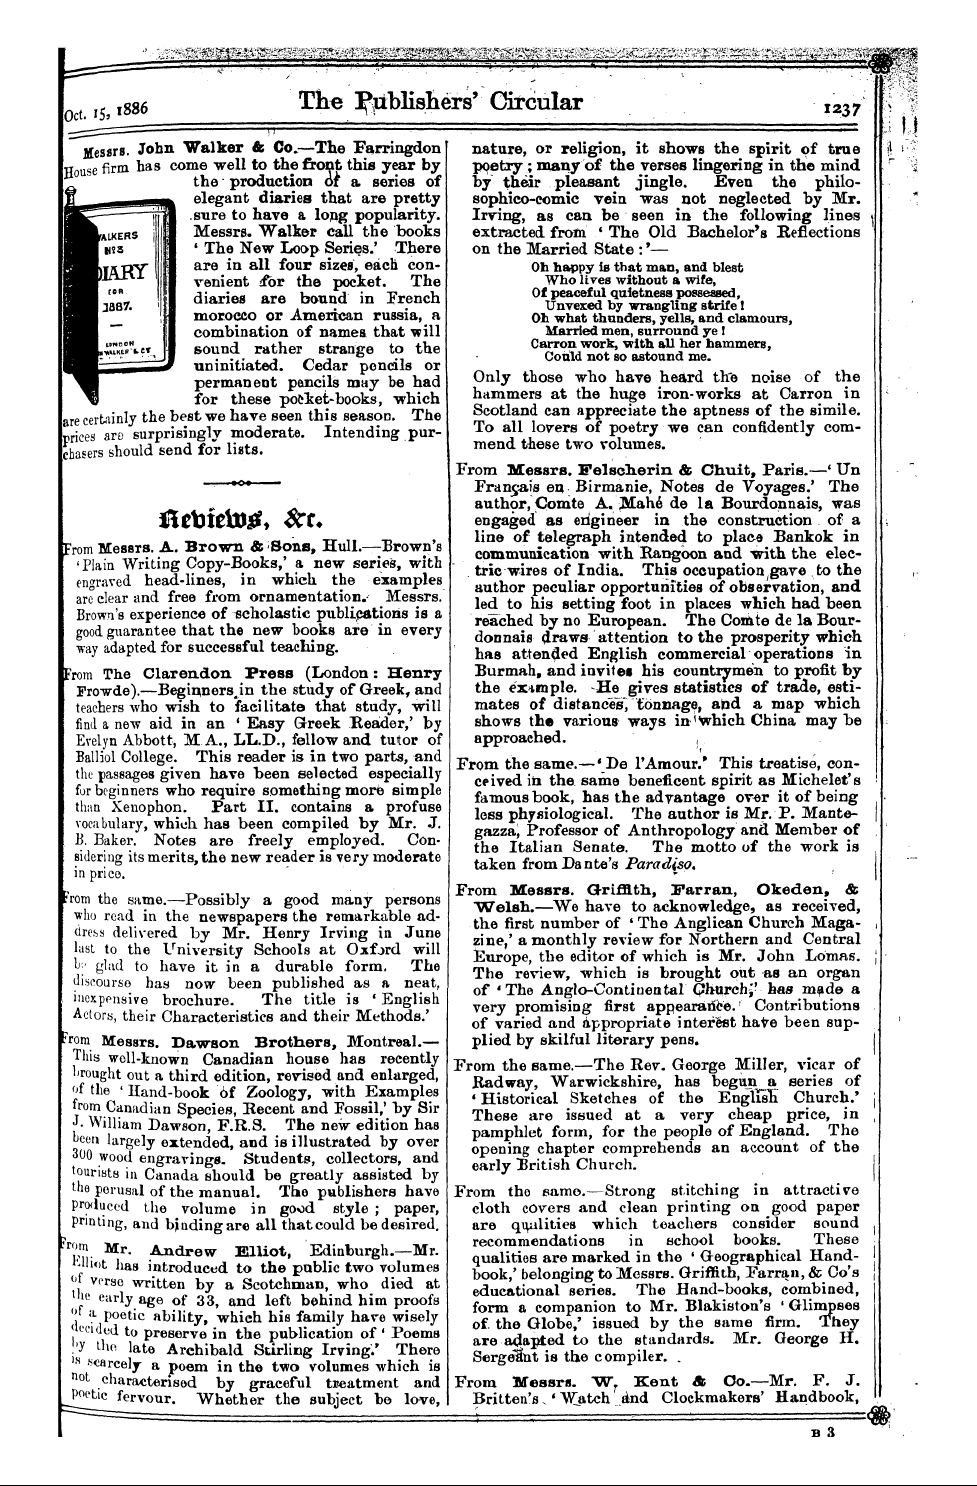 Publishers’ Circular (1880-1890): jS F Y, 1st edition: 15